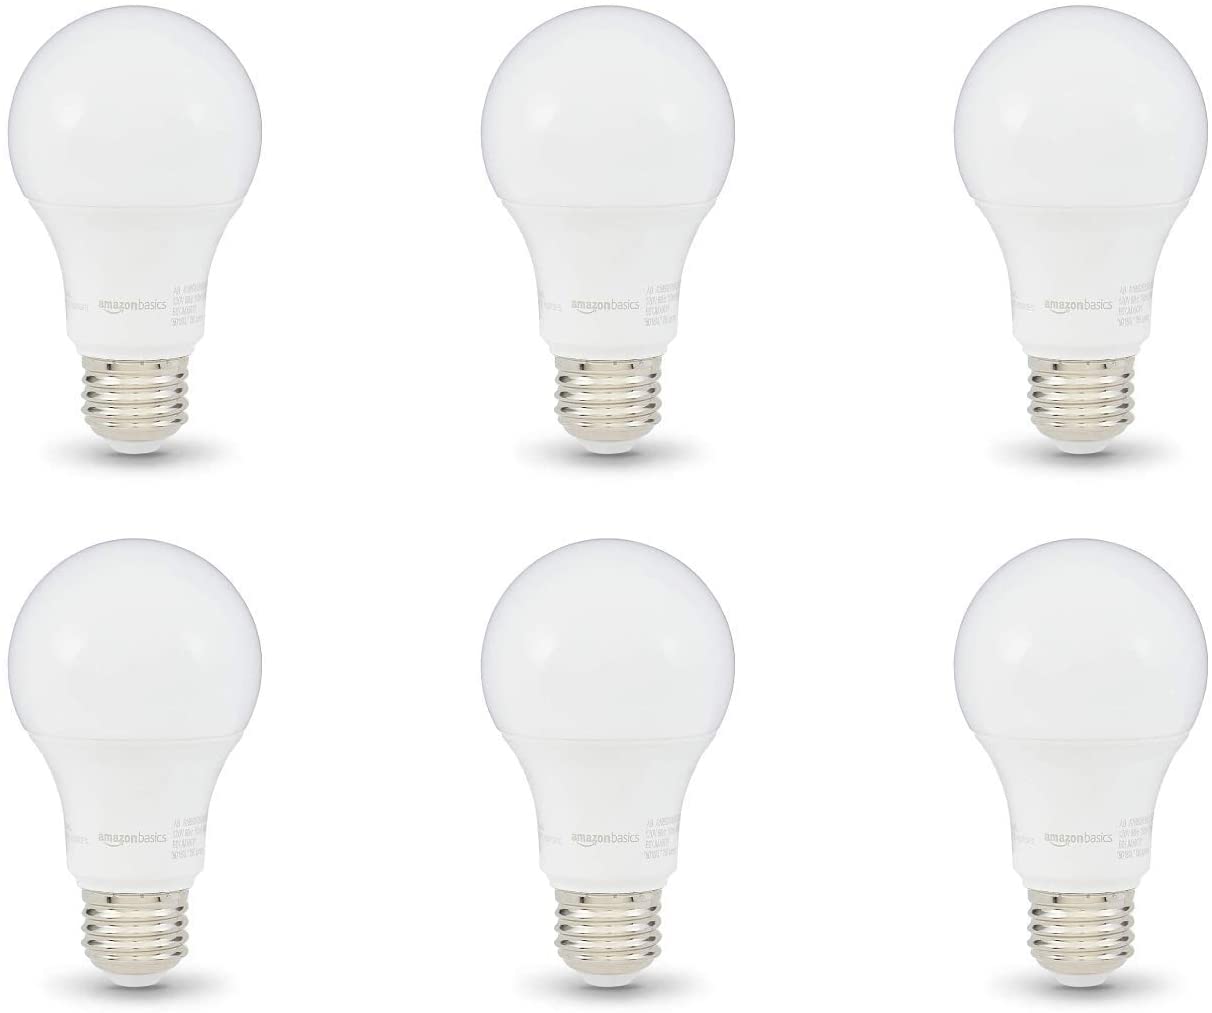 Basics 60W Equivalent, Soft White, Dimmable, 10,000 Hour Lifetime, A19 LED Light Bulb | 6-Pack